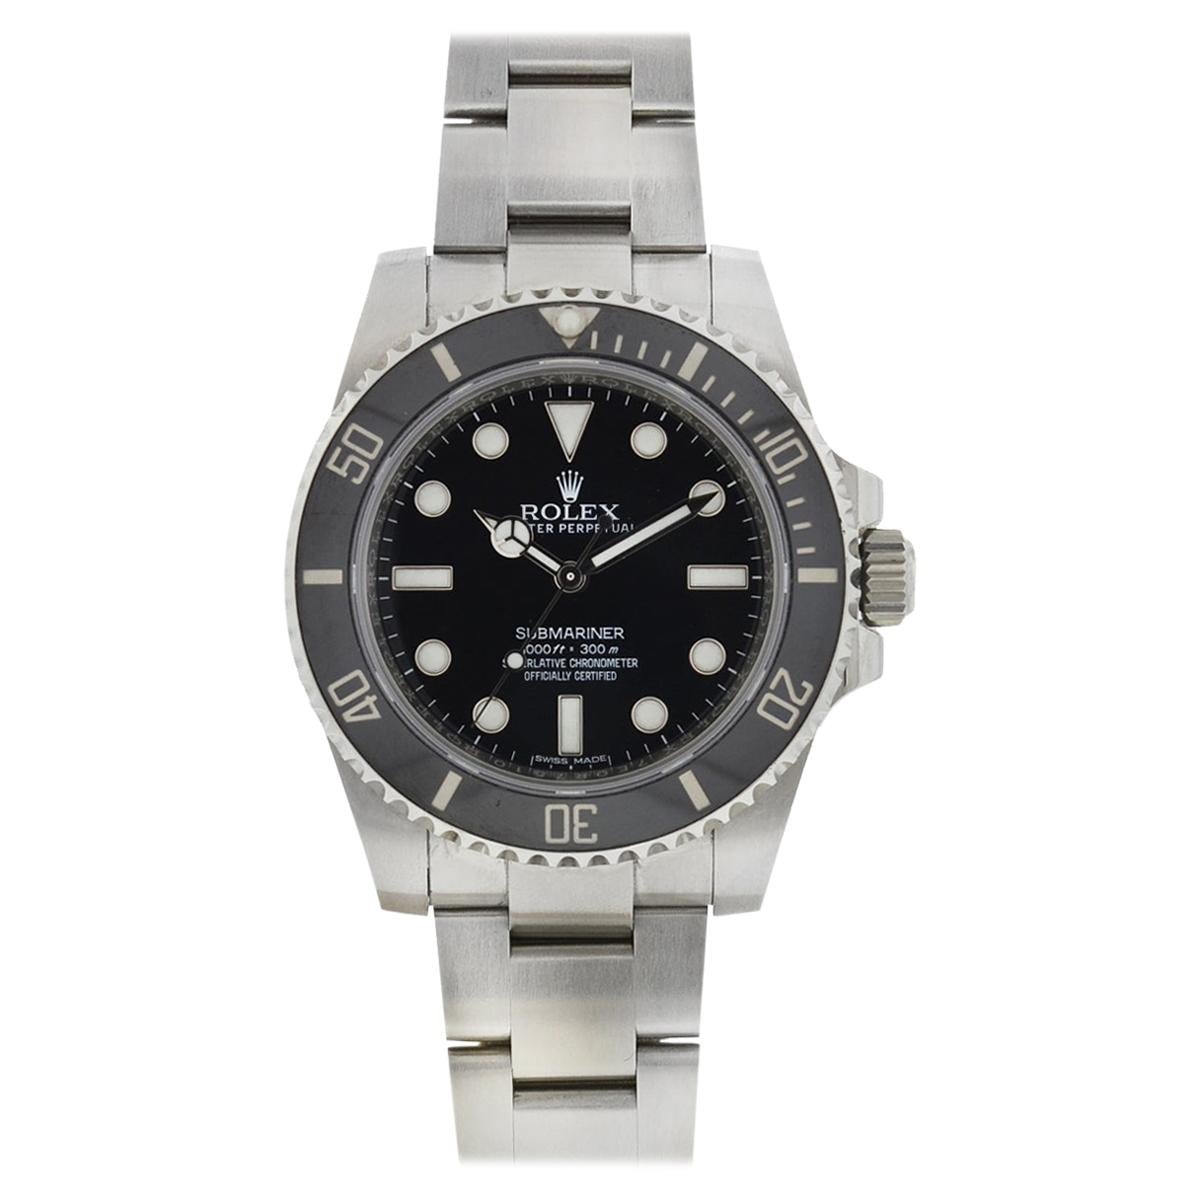 Rolex 114060 Submariner No Date Ceramic Bezel Automatic Watch